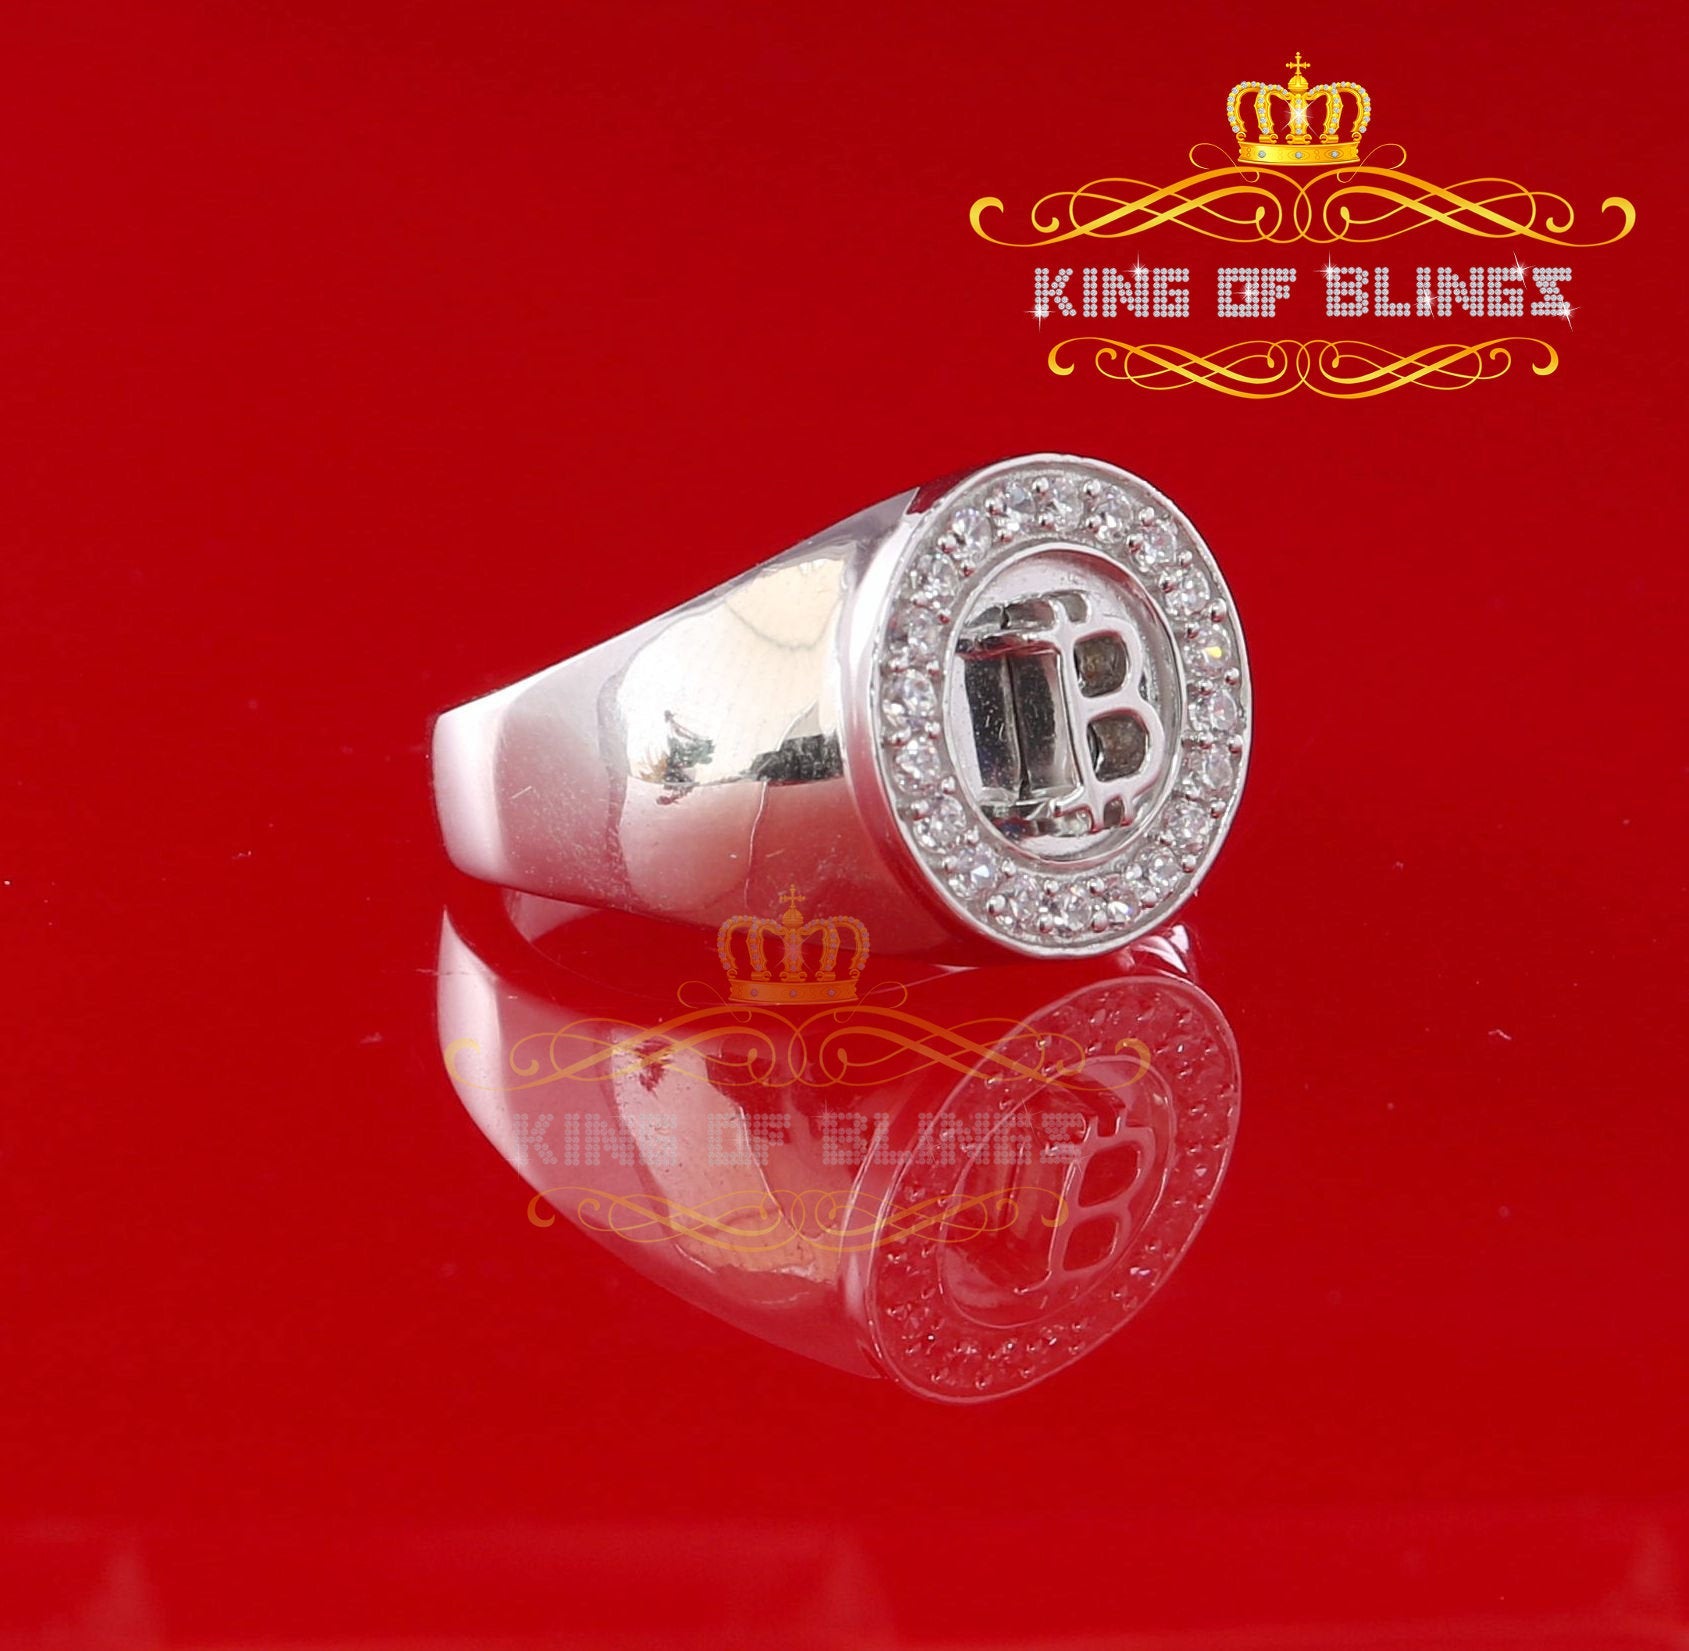 King Of Blings Men's 1.00ct Bit Coin Shape Cubic Zirconia White Silver Ring SZ 9 KING OF BLINGS